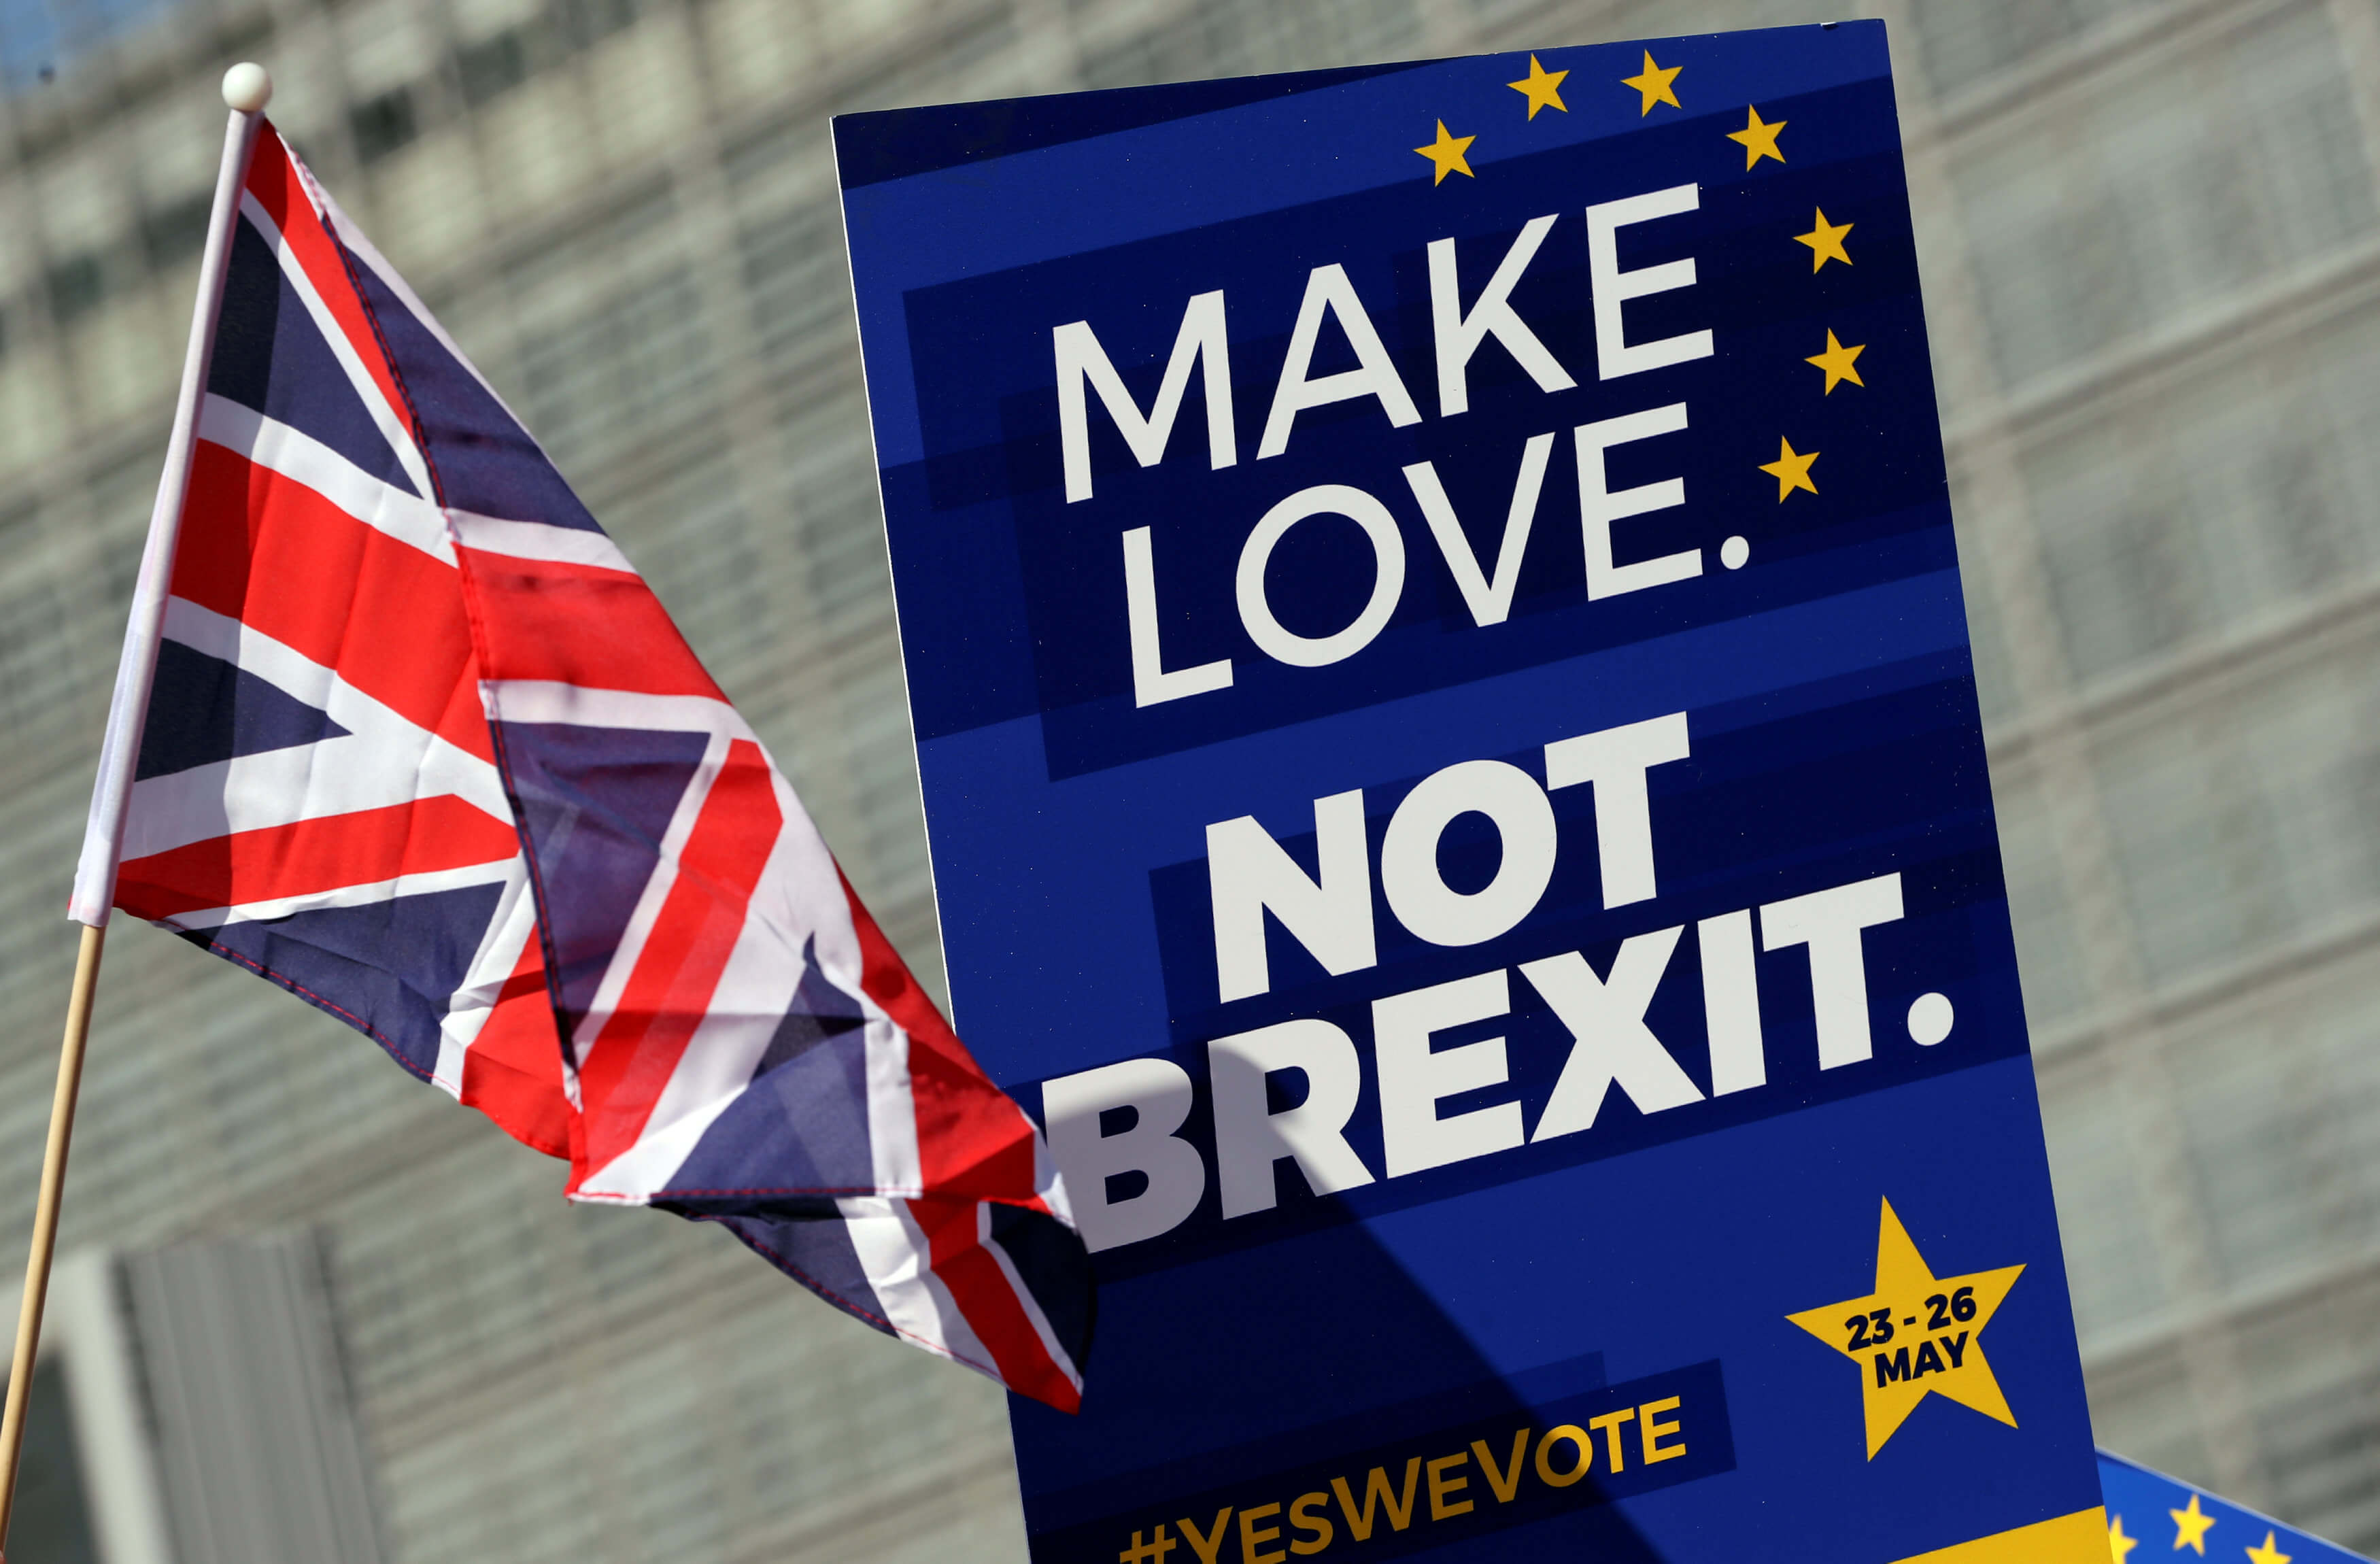 Stop Brexit λένε στη Βρετανία! Πάνω από 900.000 υπογραφές για ανατροπή της εξόδου από την ΕΕ